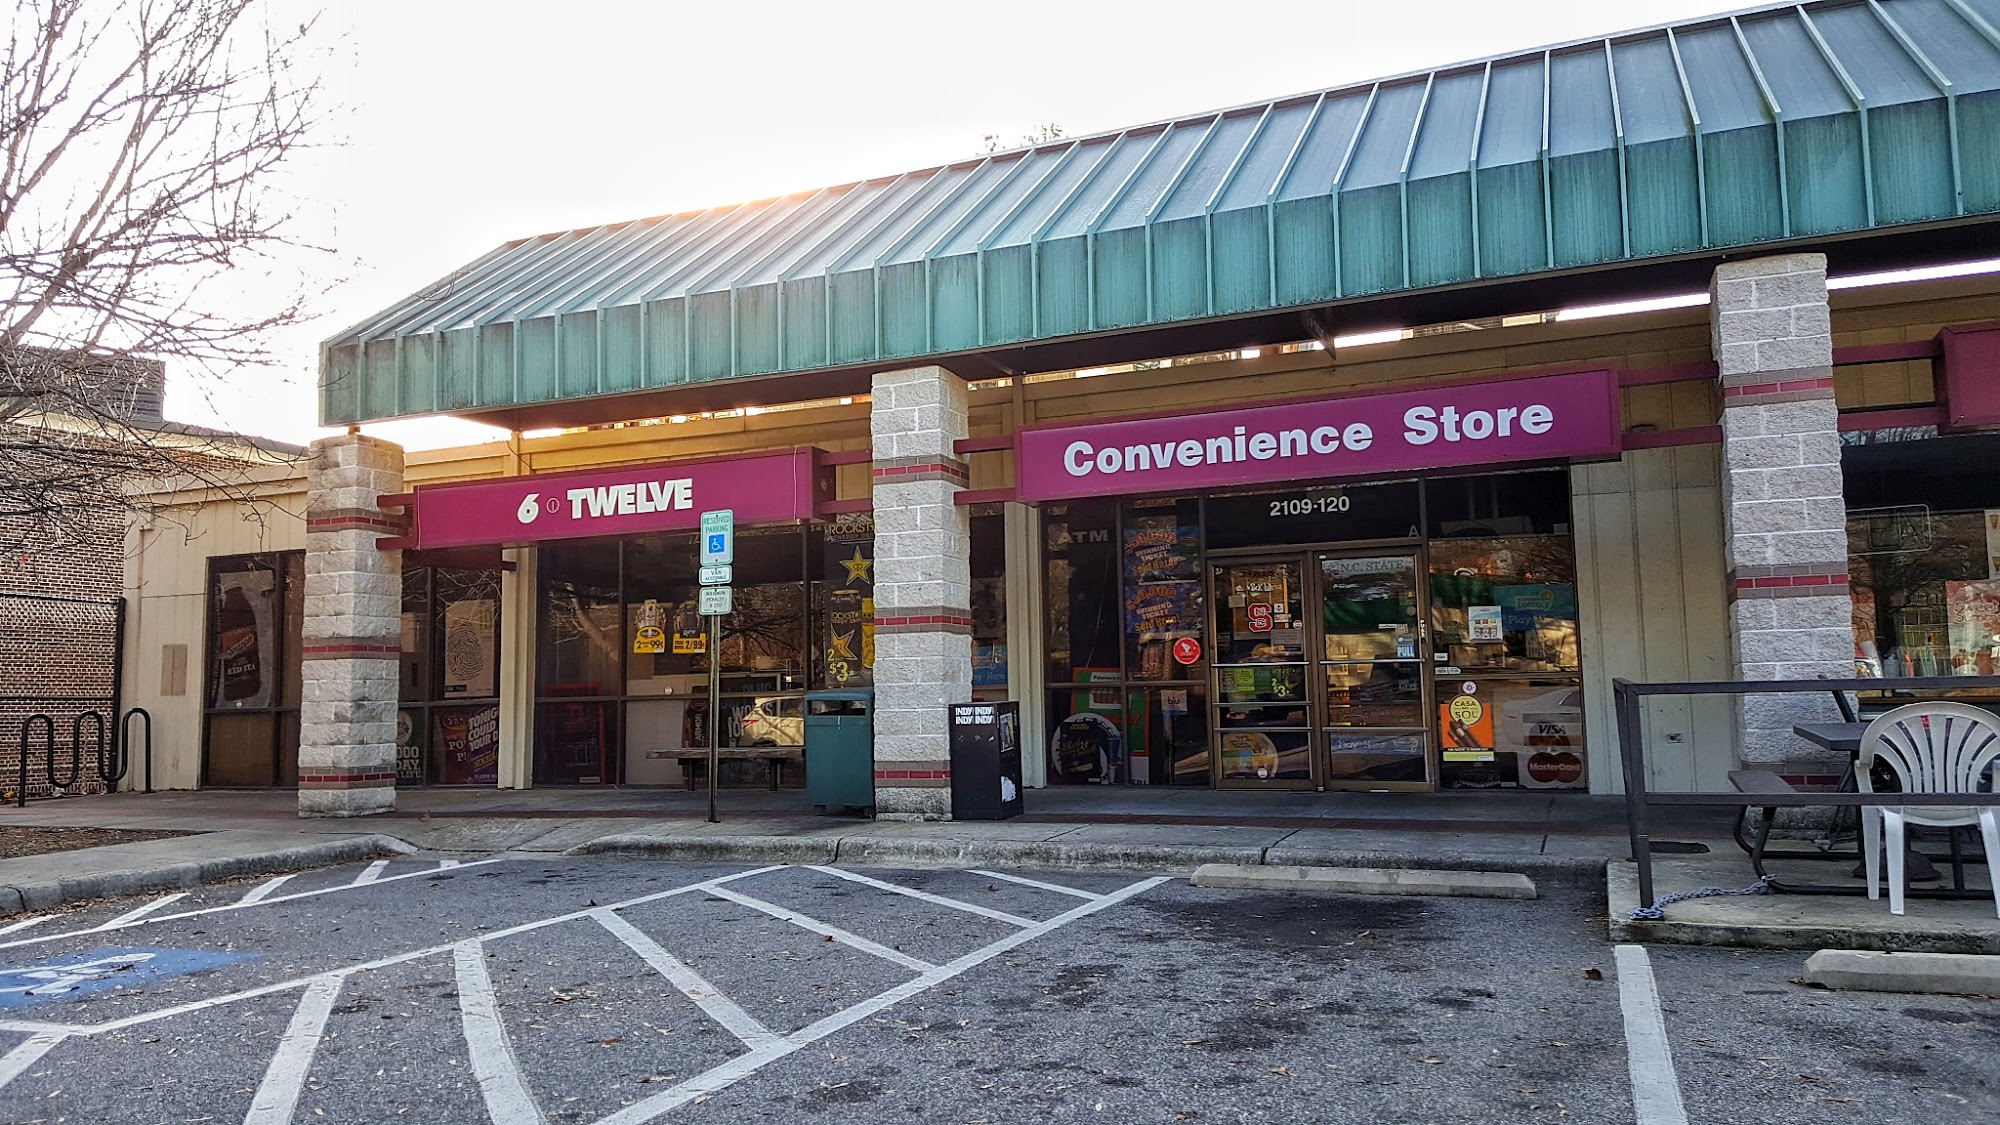 6 Twelve Convenience Store